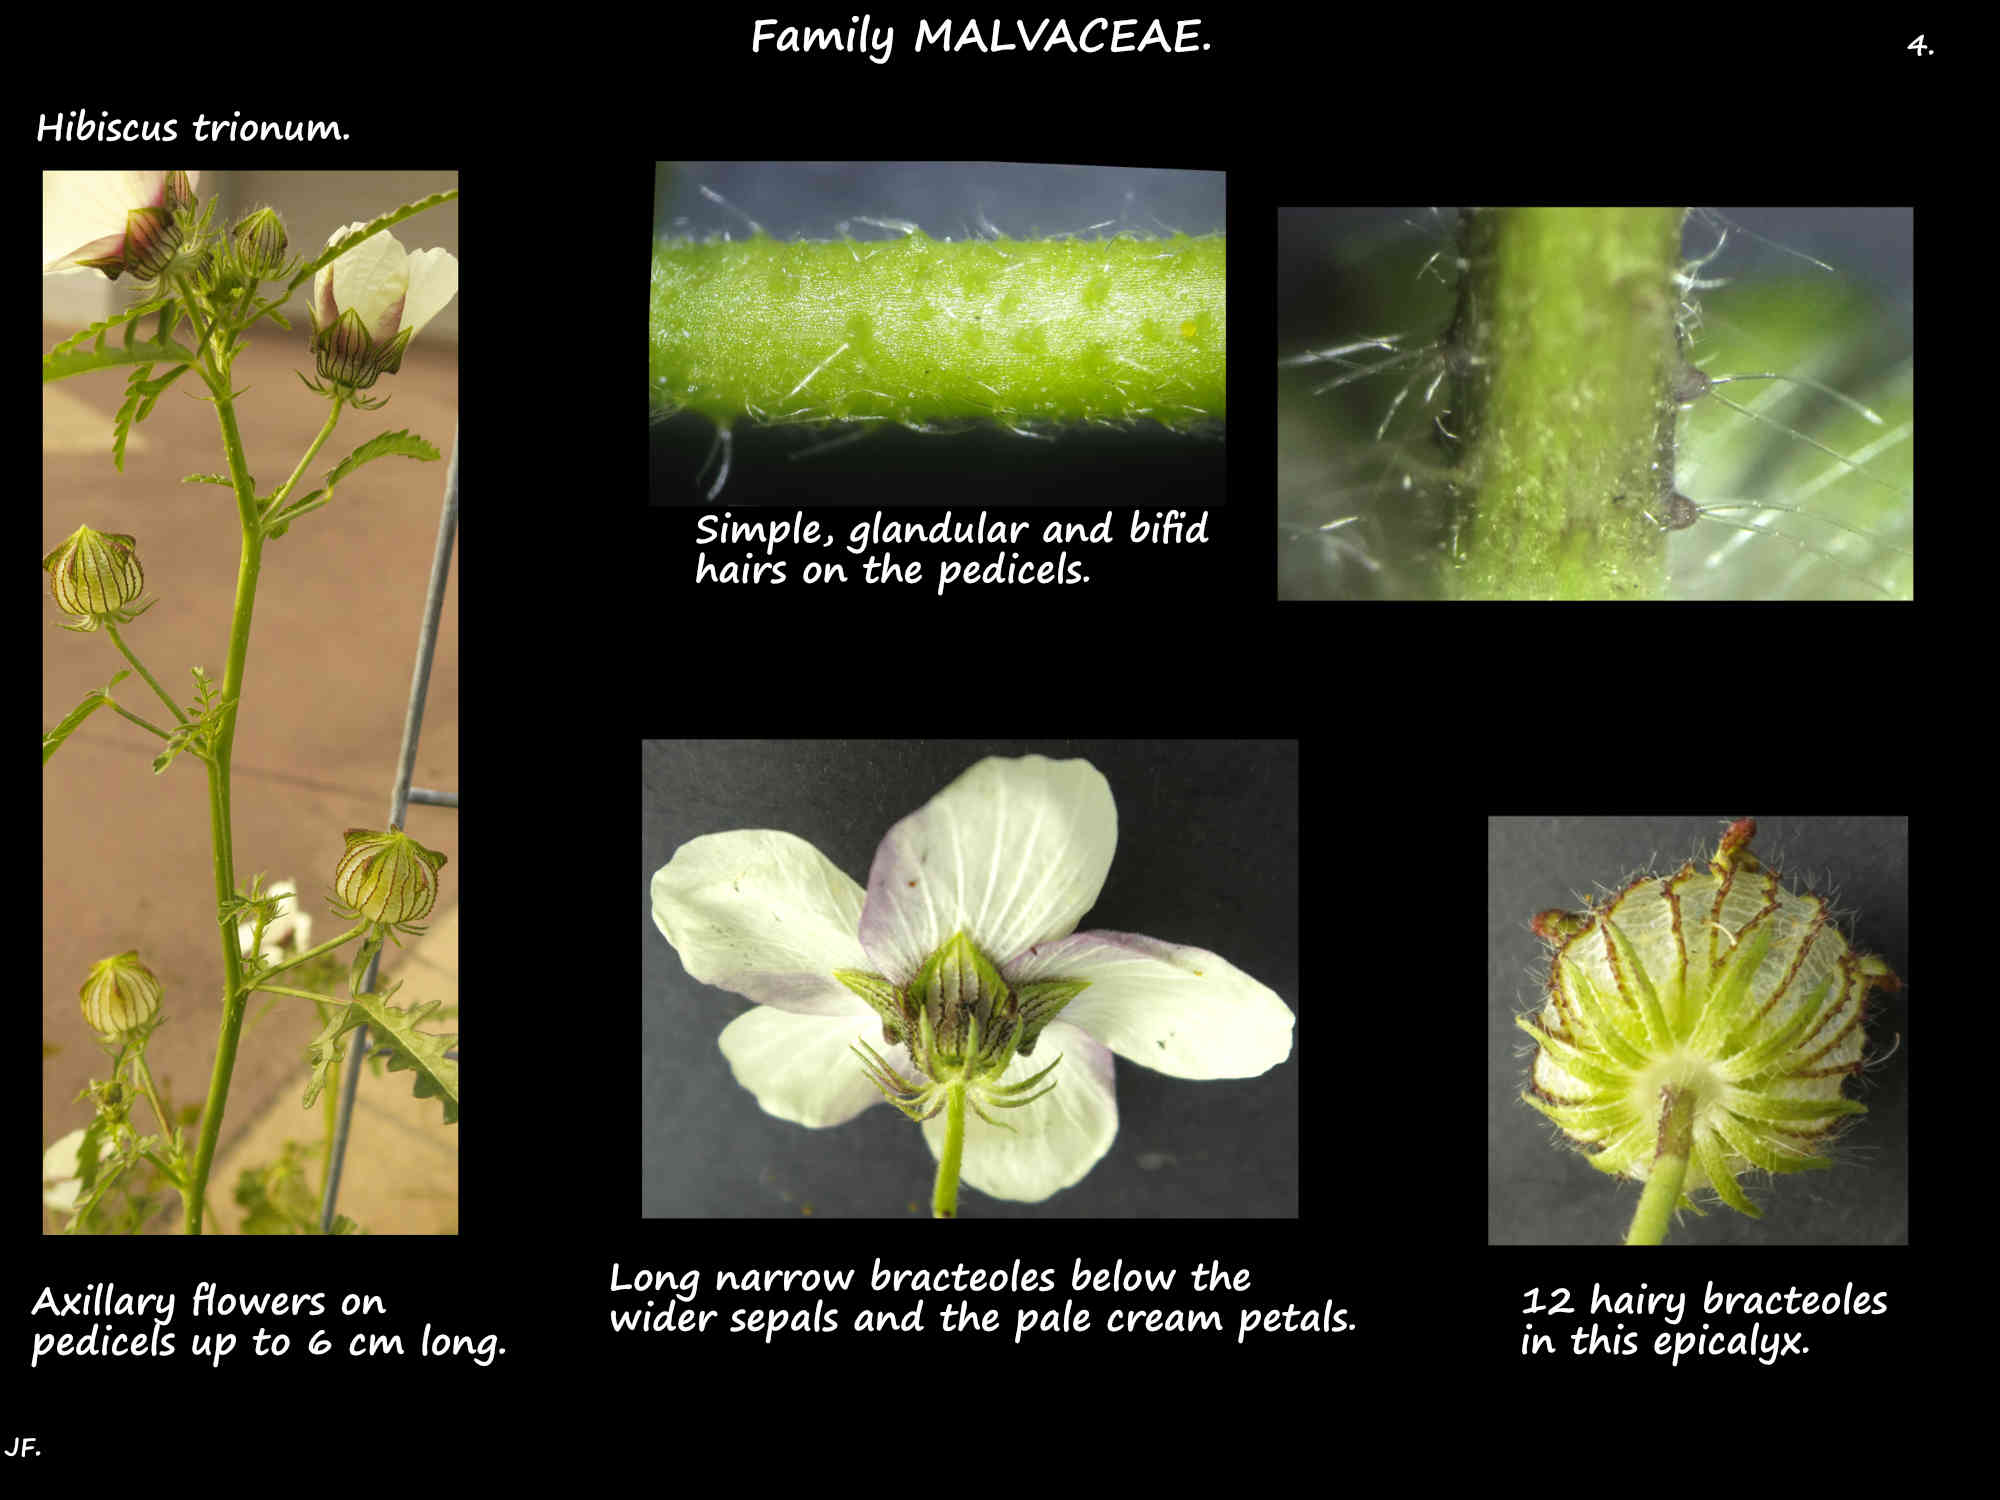 4 Rose Mallow inflorescences, pedicel hairs & bracteoles